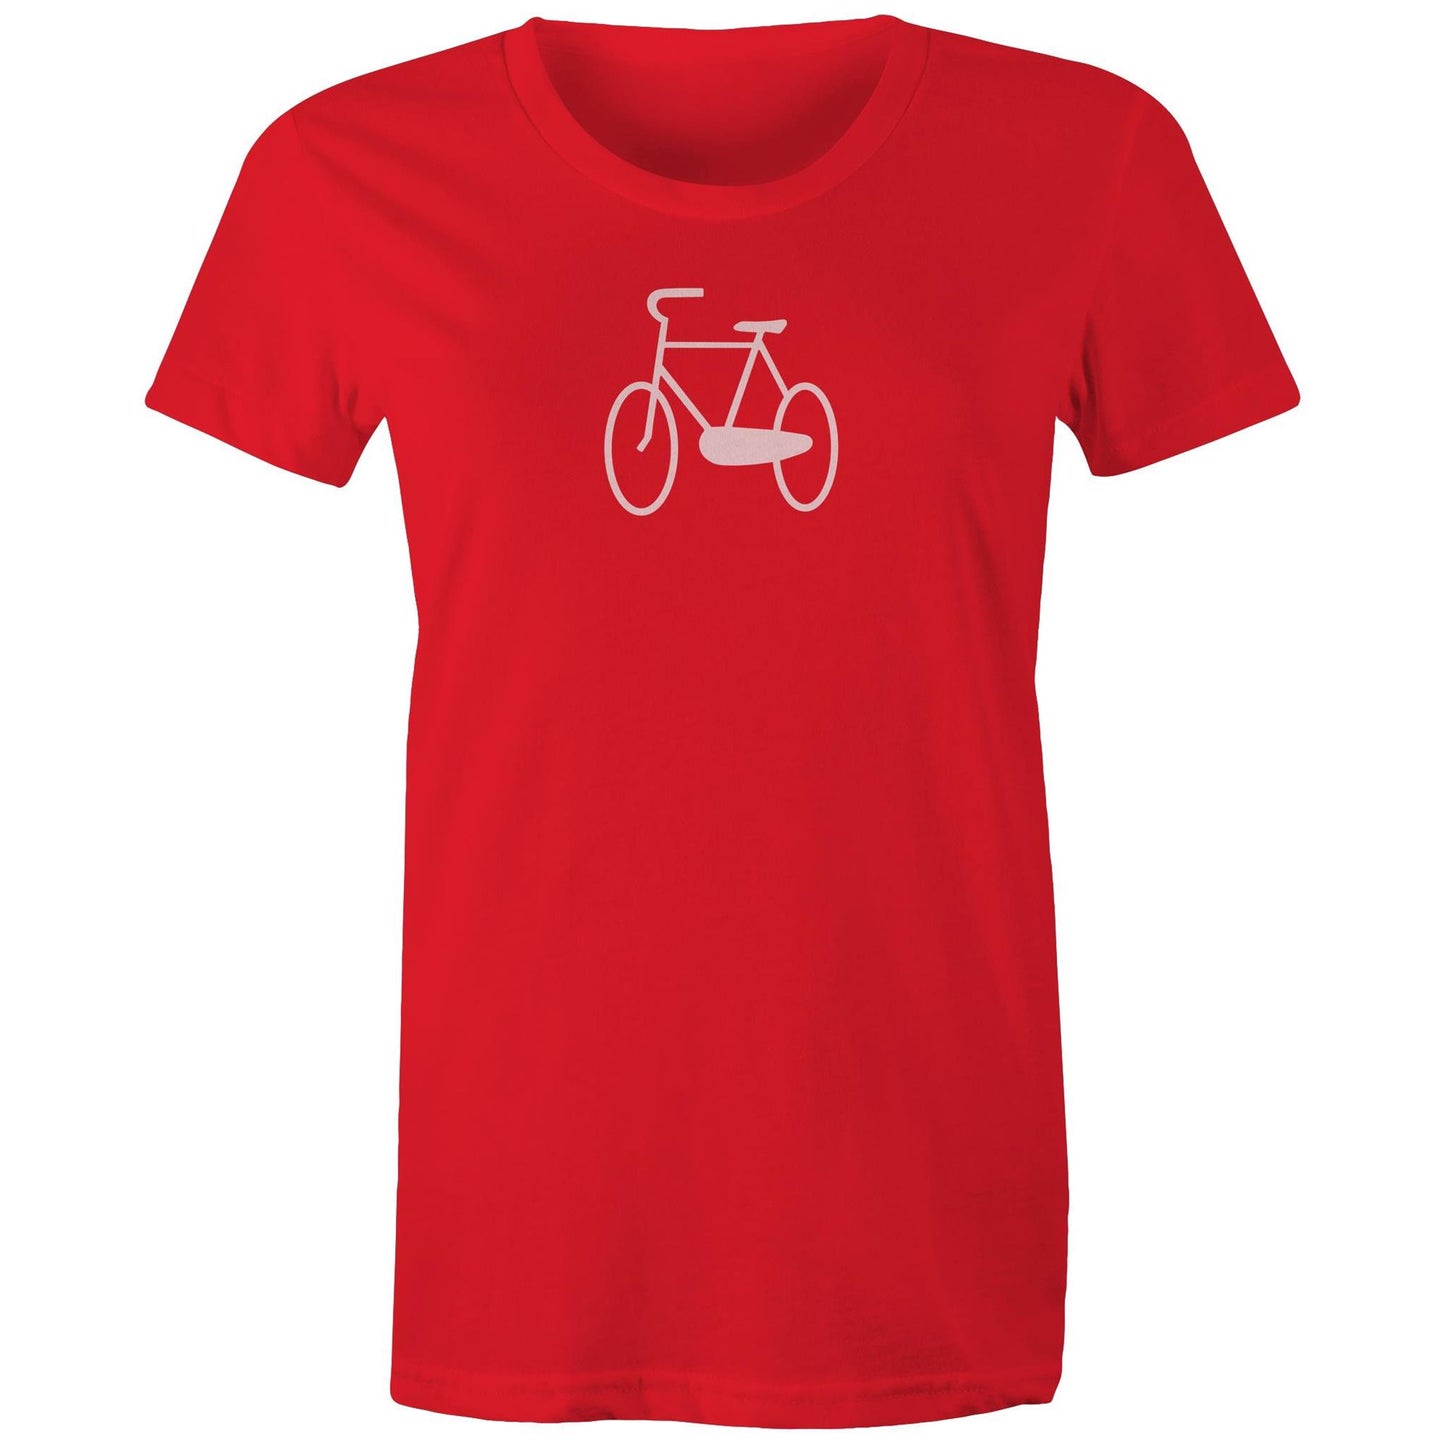 Bike Icon T Shirts for Women